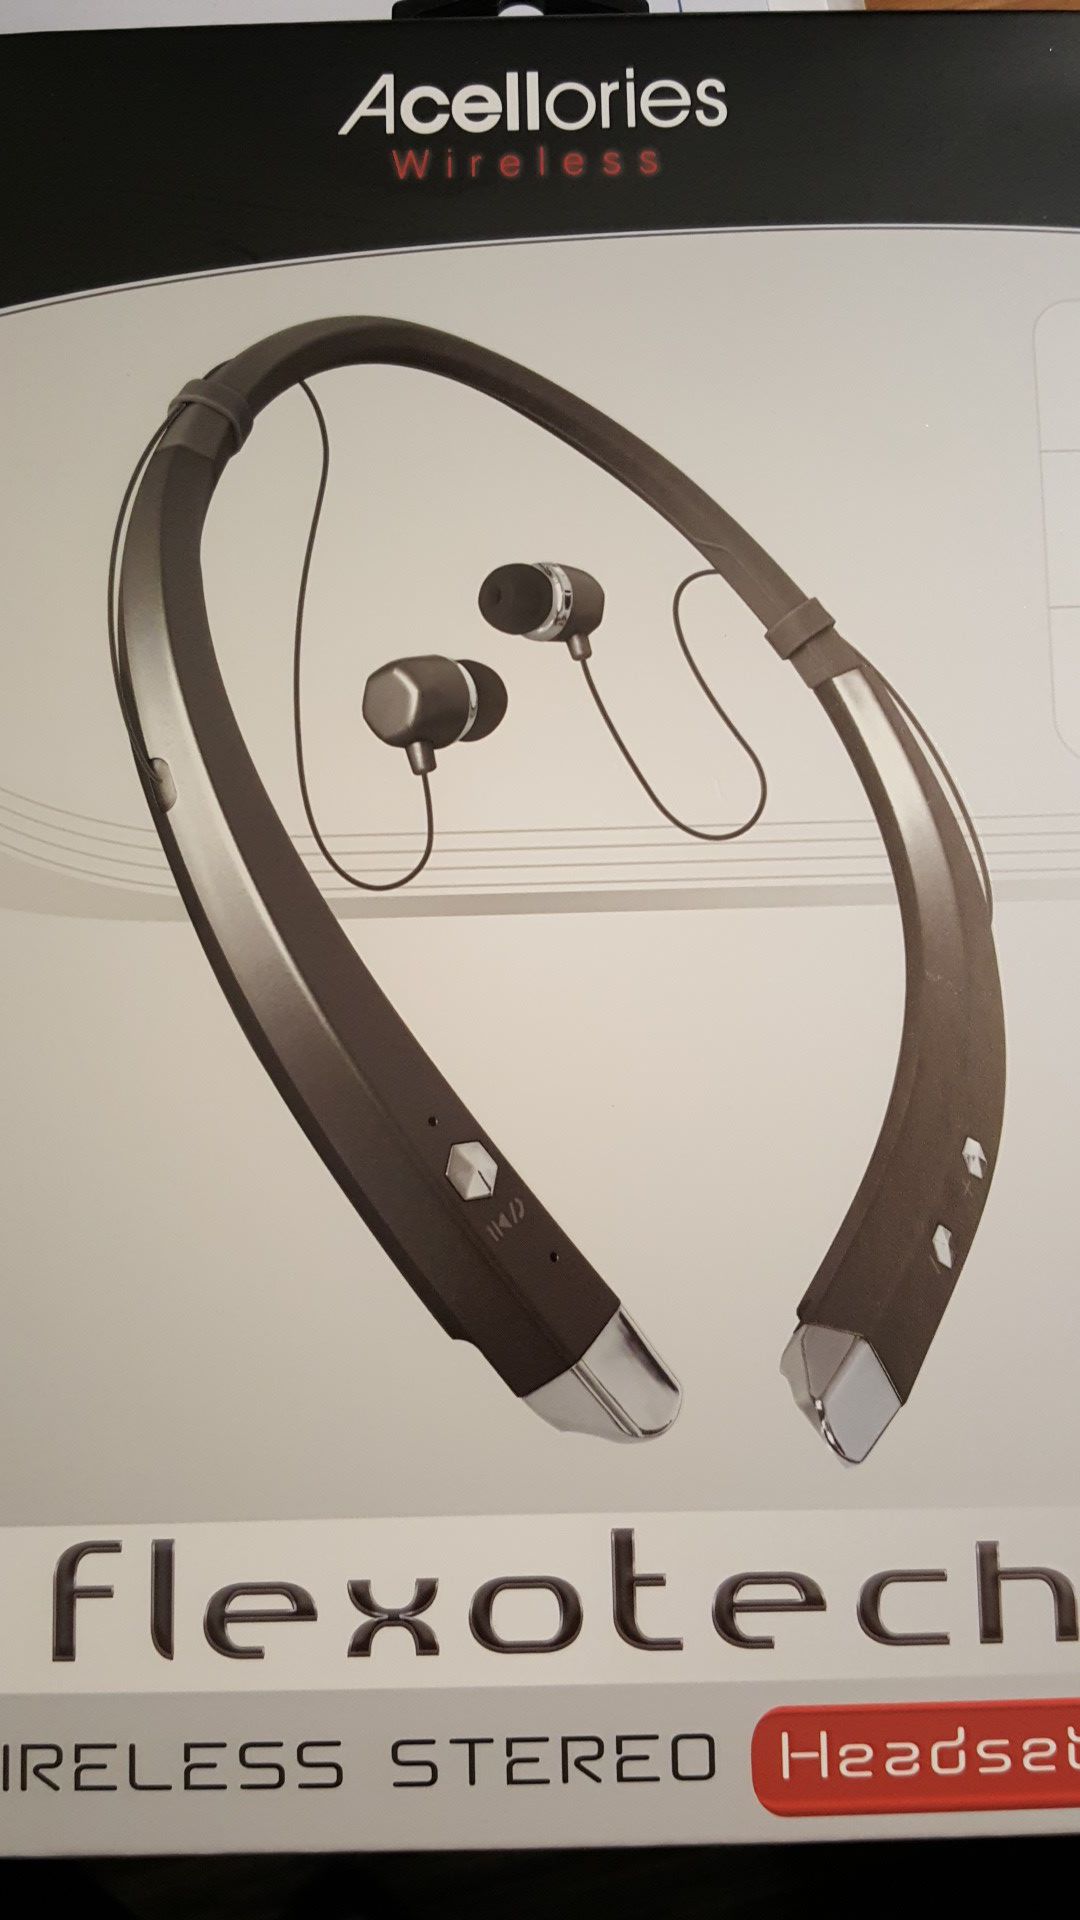 Flexotech Headset (wireless)